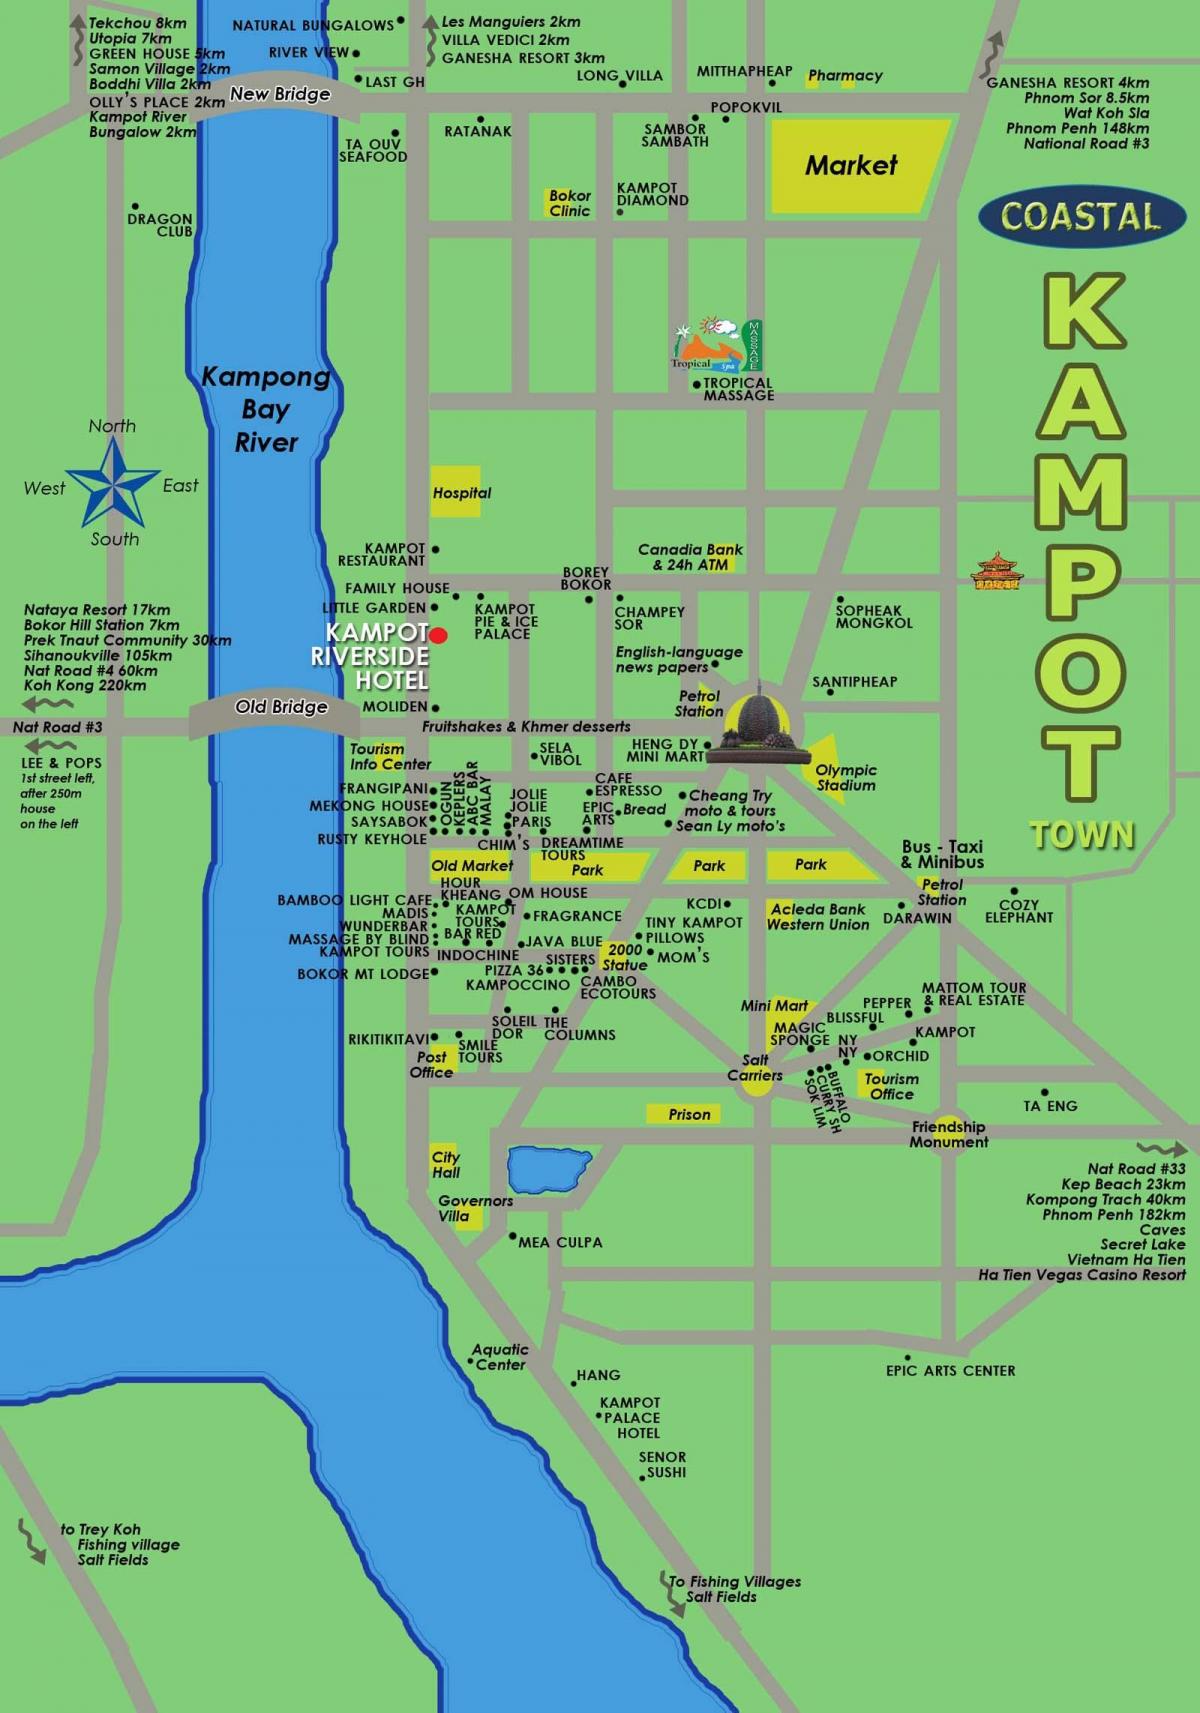 Karte von kampot Kambodscha